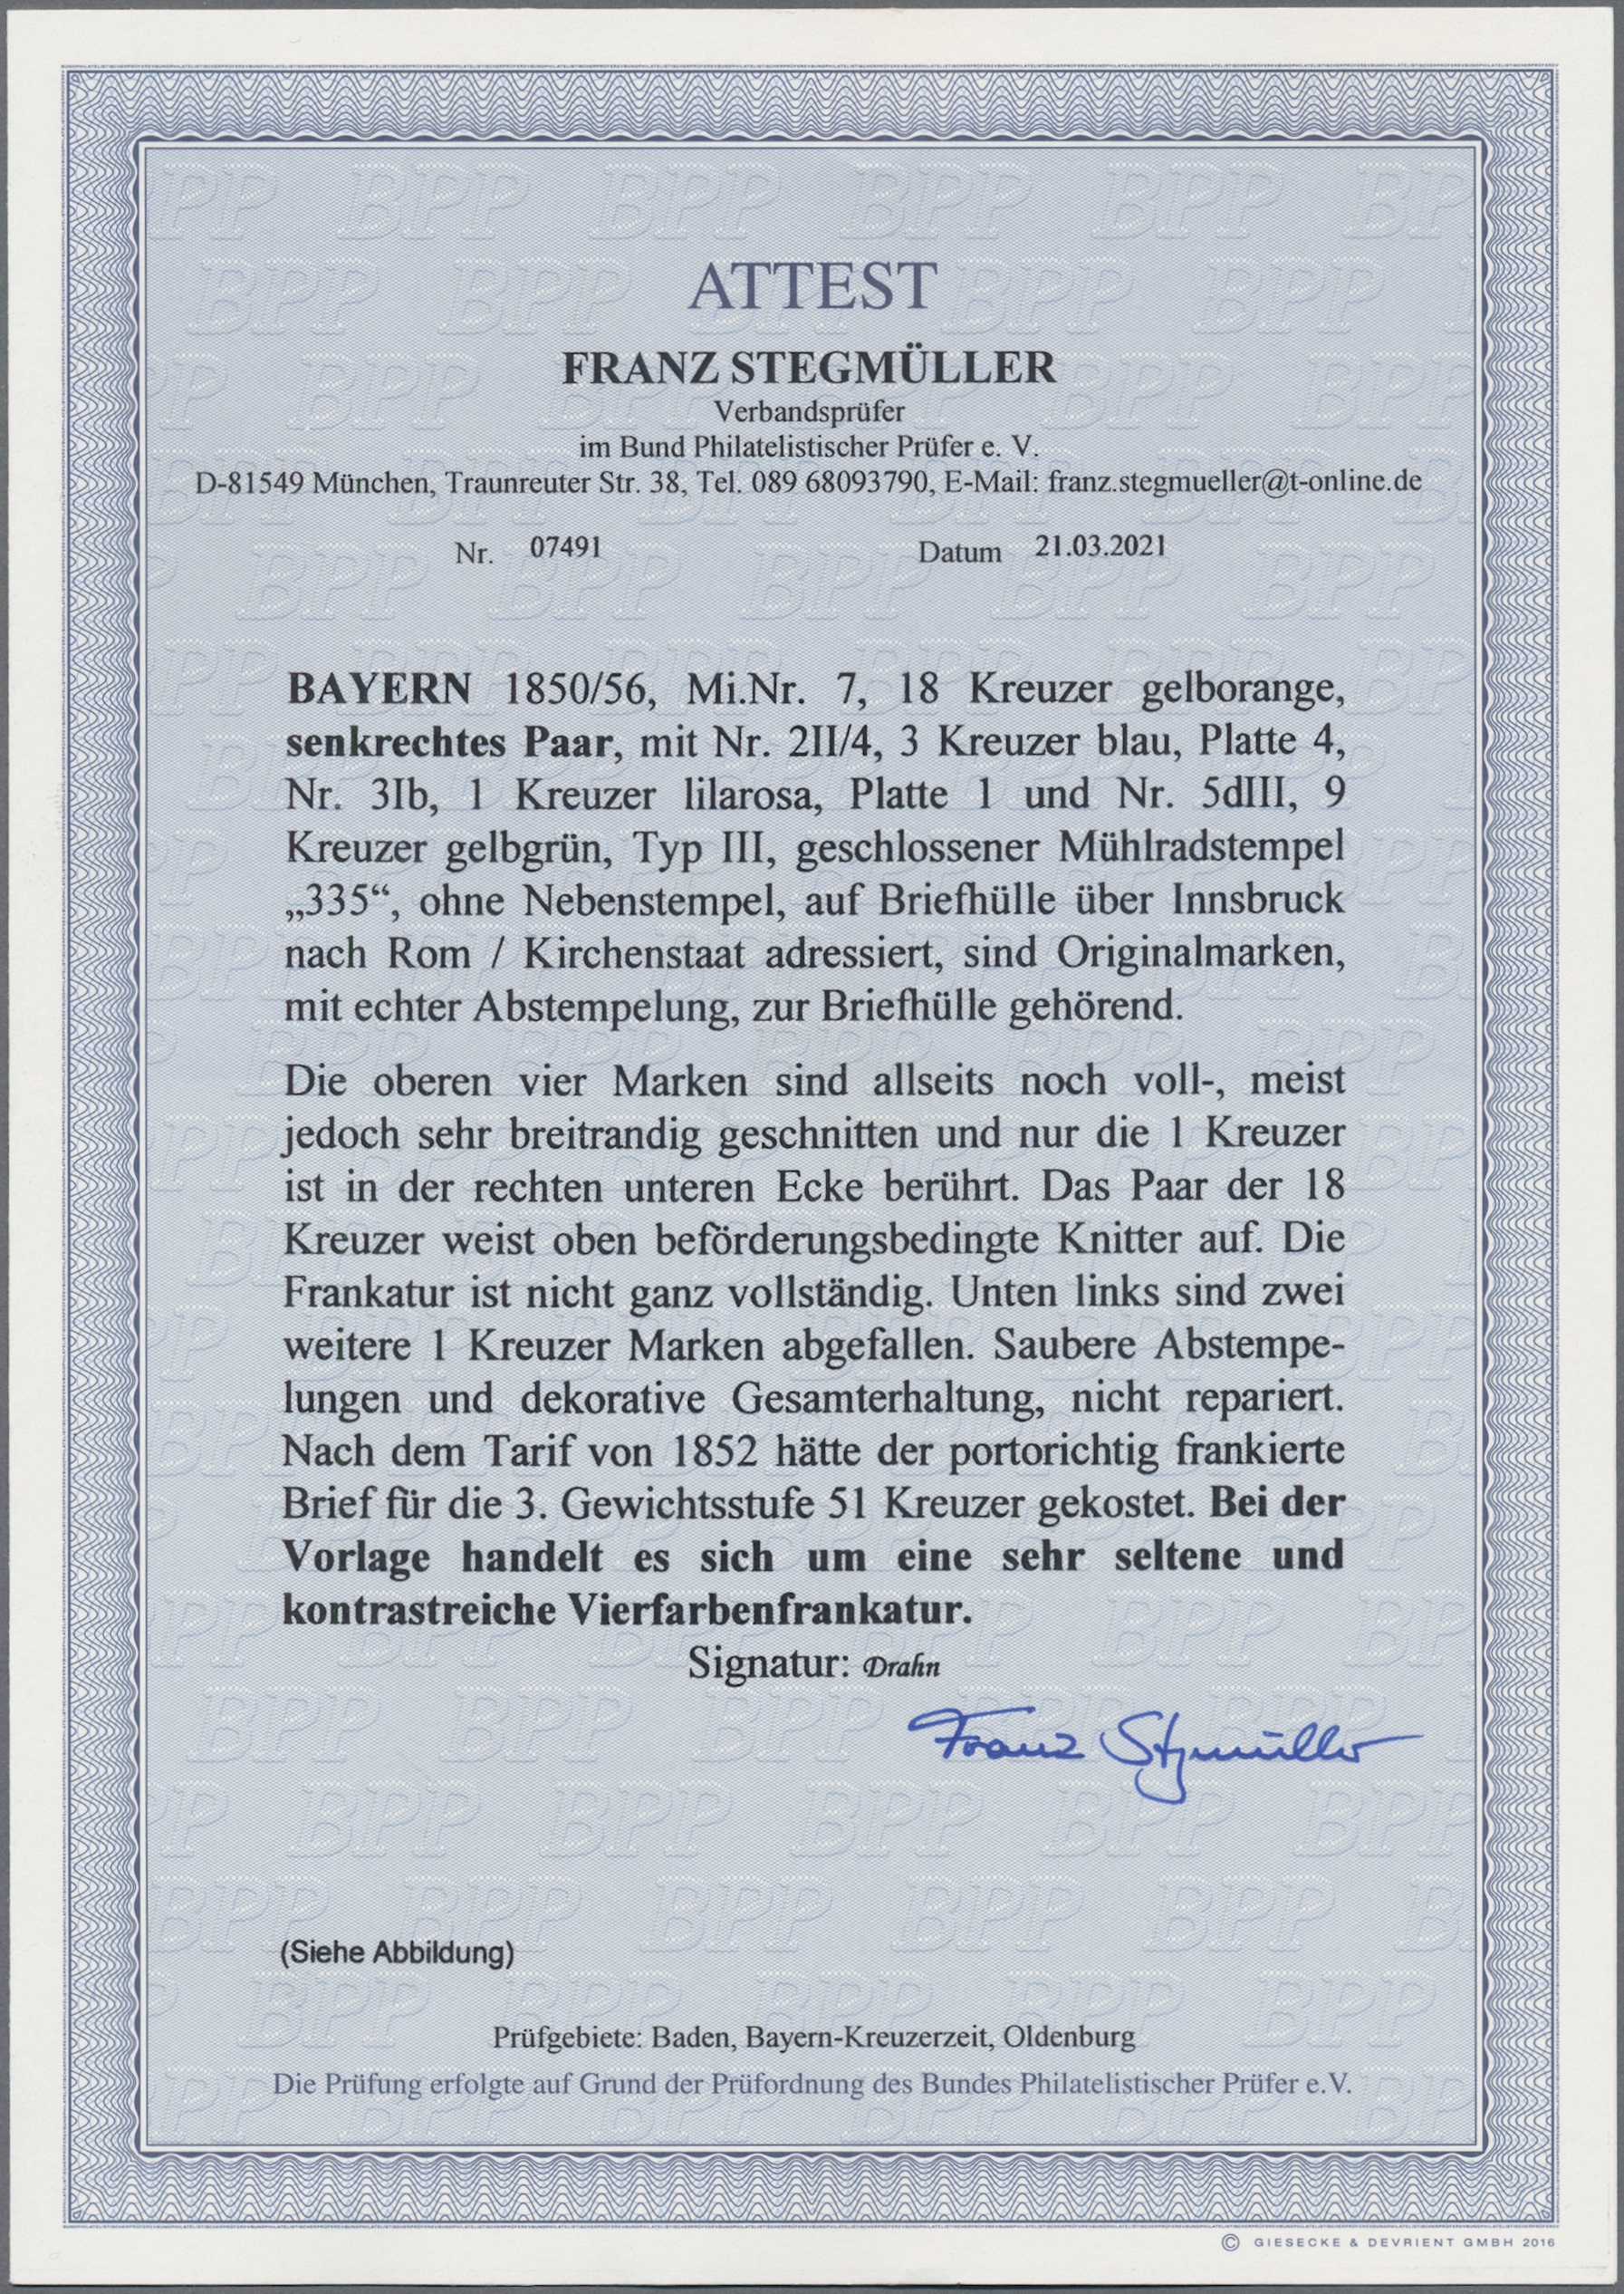 Lot 02740 - Bayern - Marken und Briefe  -  Auktionshaus Christoph Gärtner GmbH & Co. KG 53rd AUCTION - Day 3 Germany